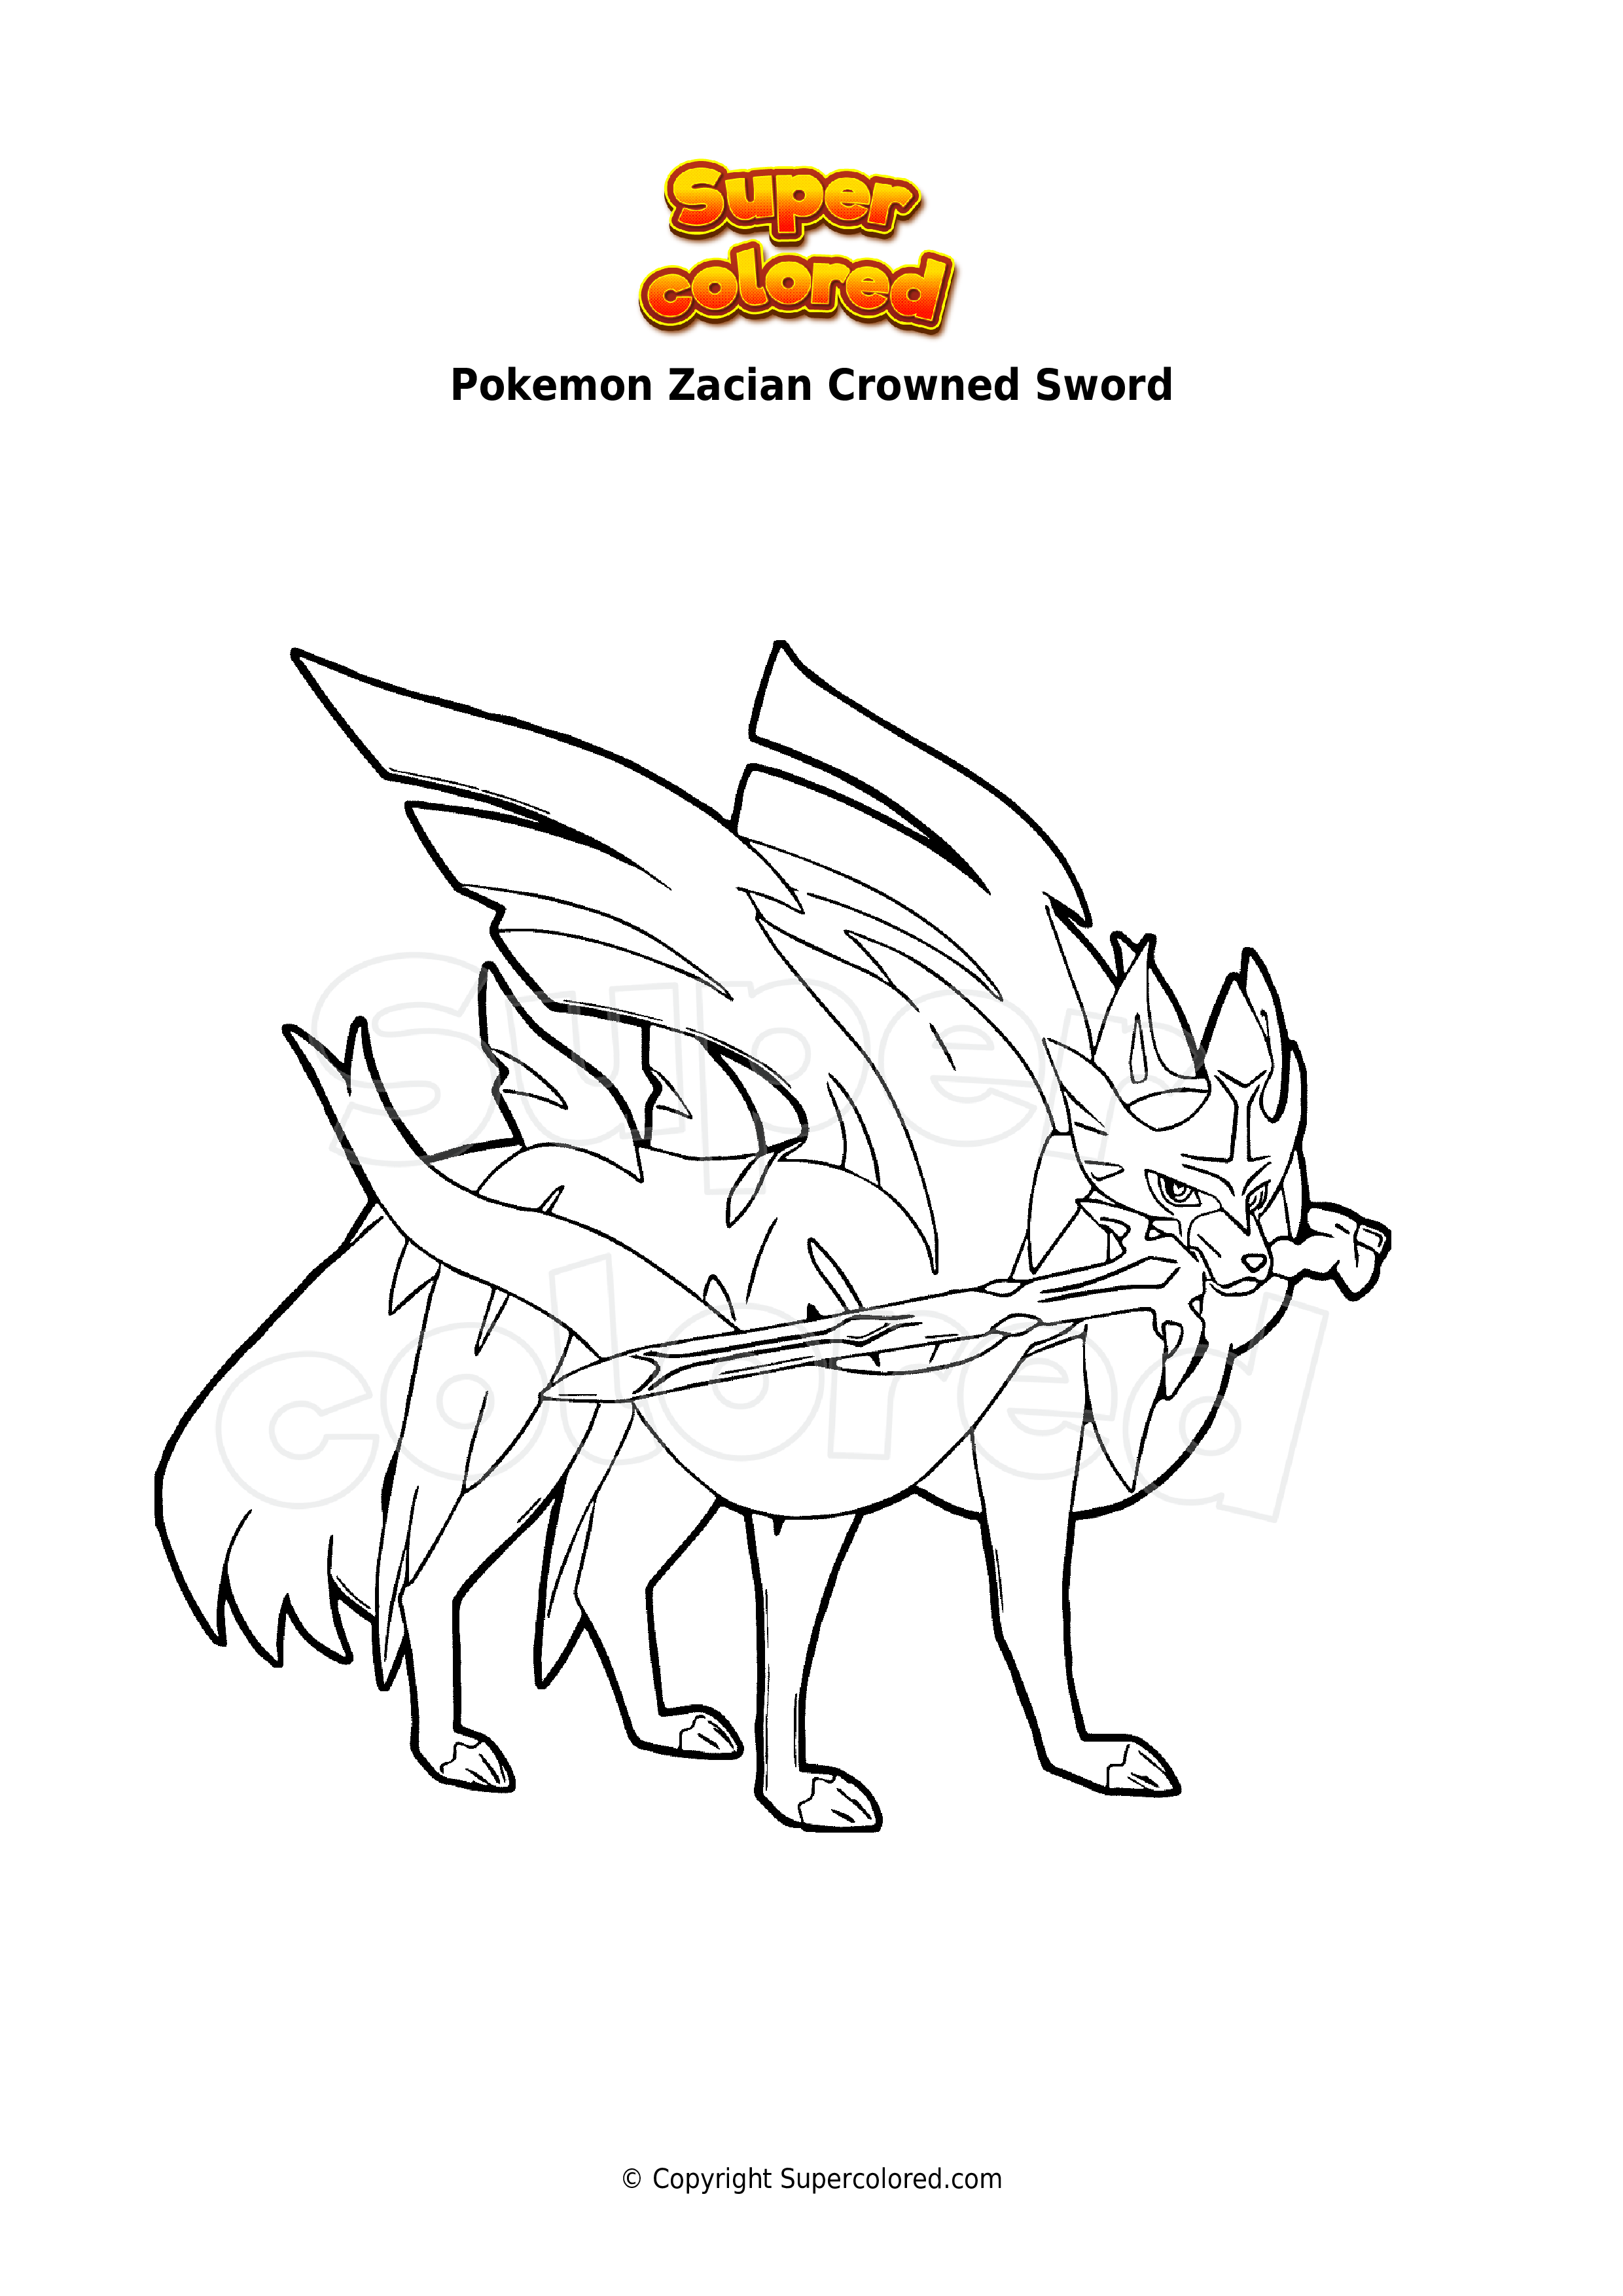 Pokemon Zacian Crowned